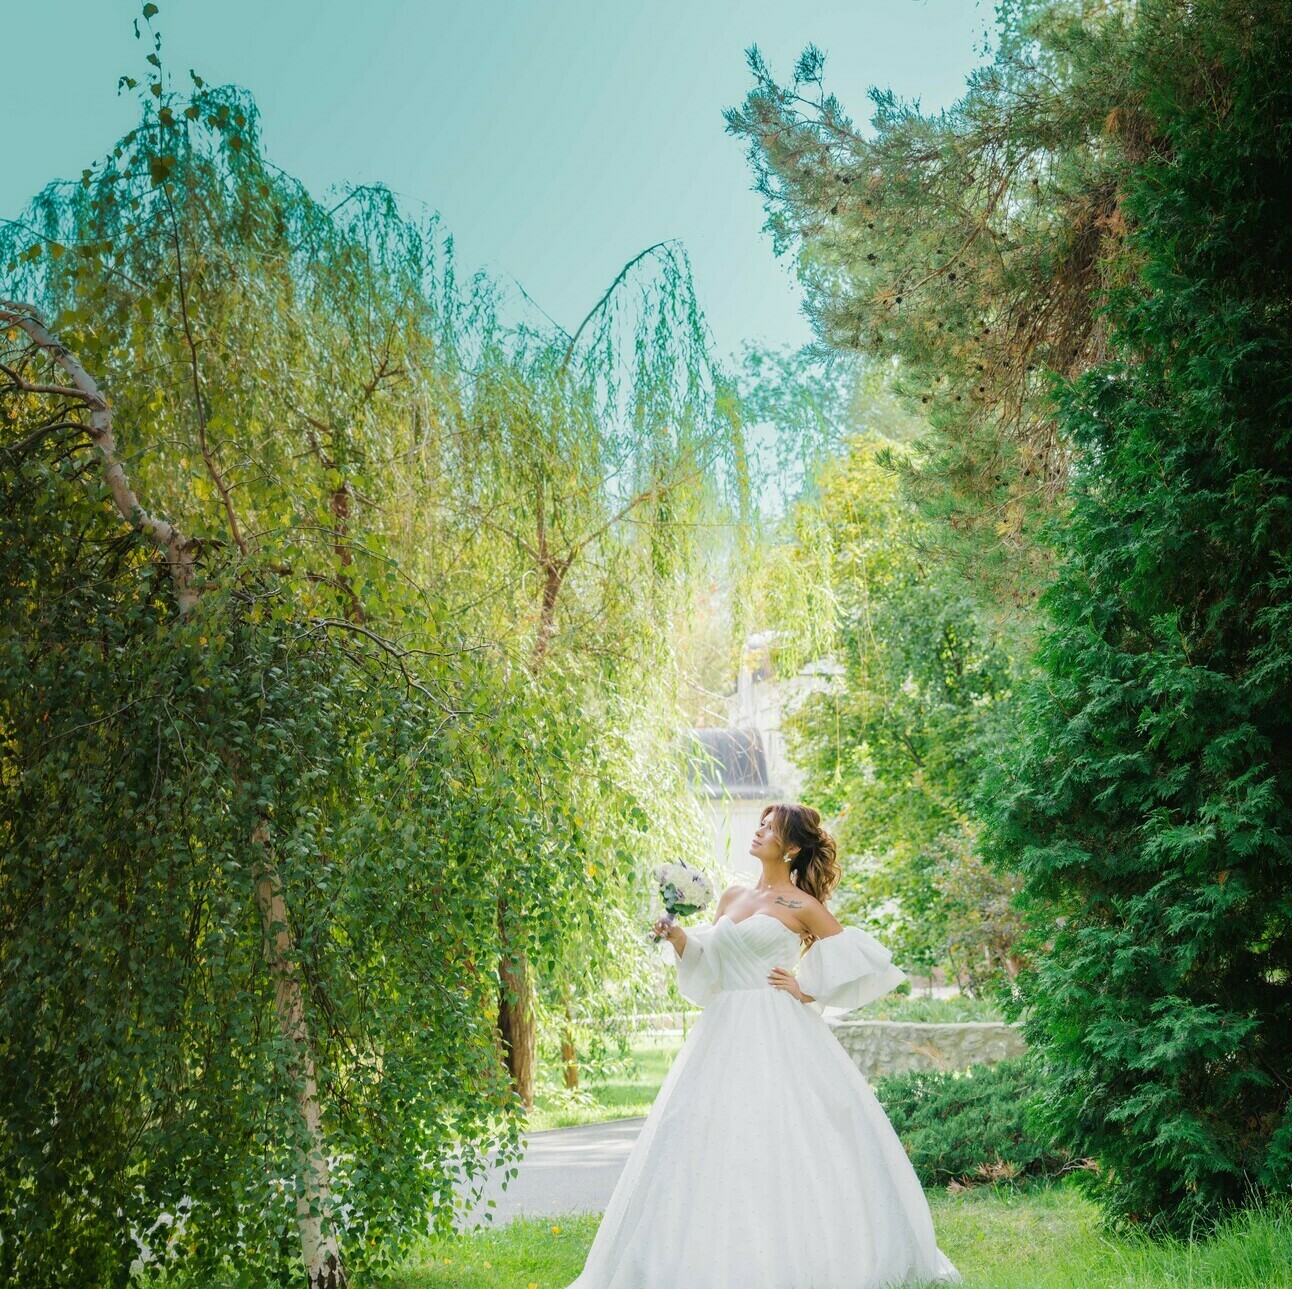 wedding photo, beauty, white dress, wedding bouquet of flowers, portrait, daisy, sweetheart, lips and chamomile,